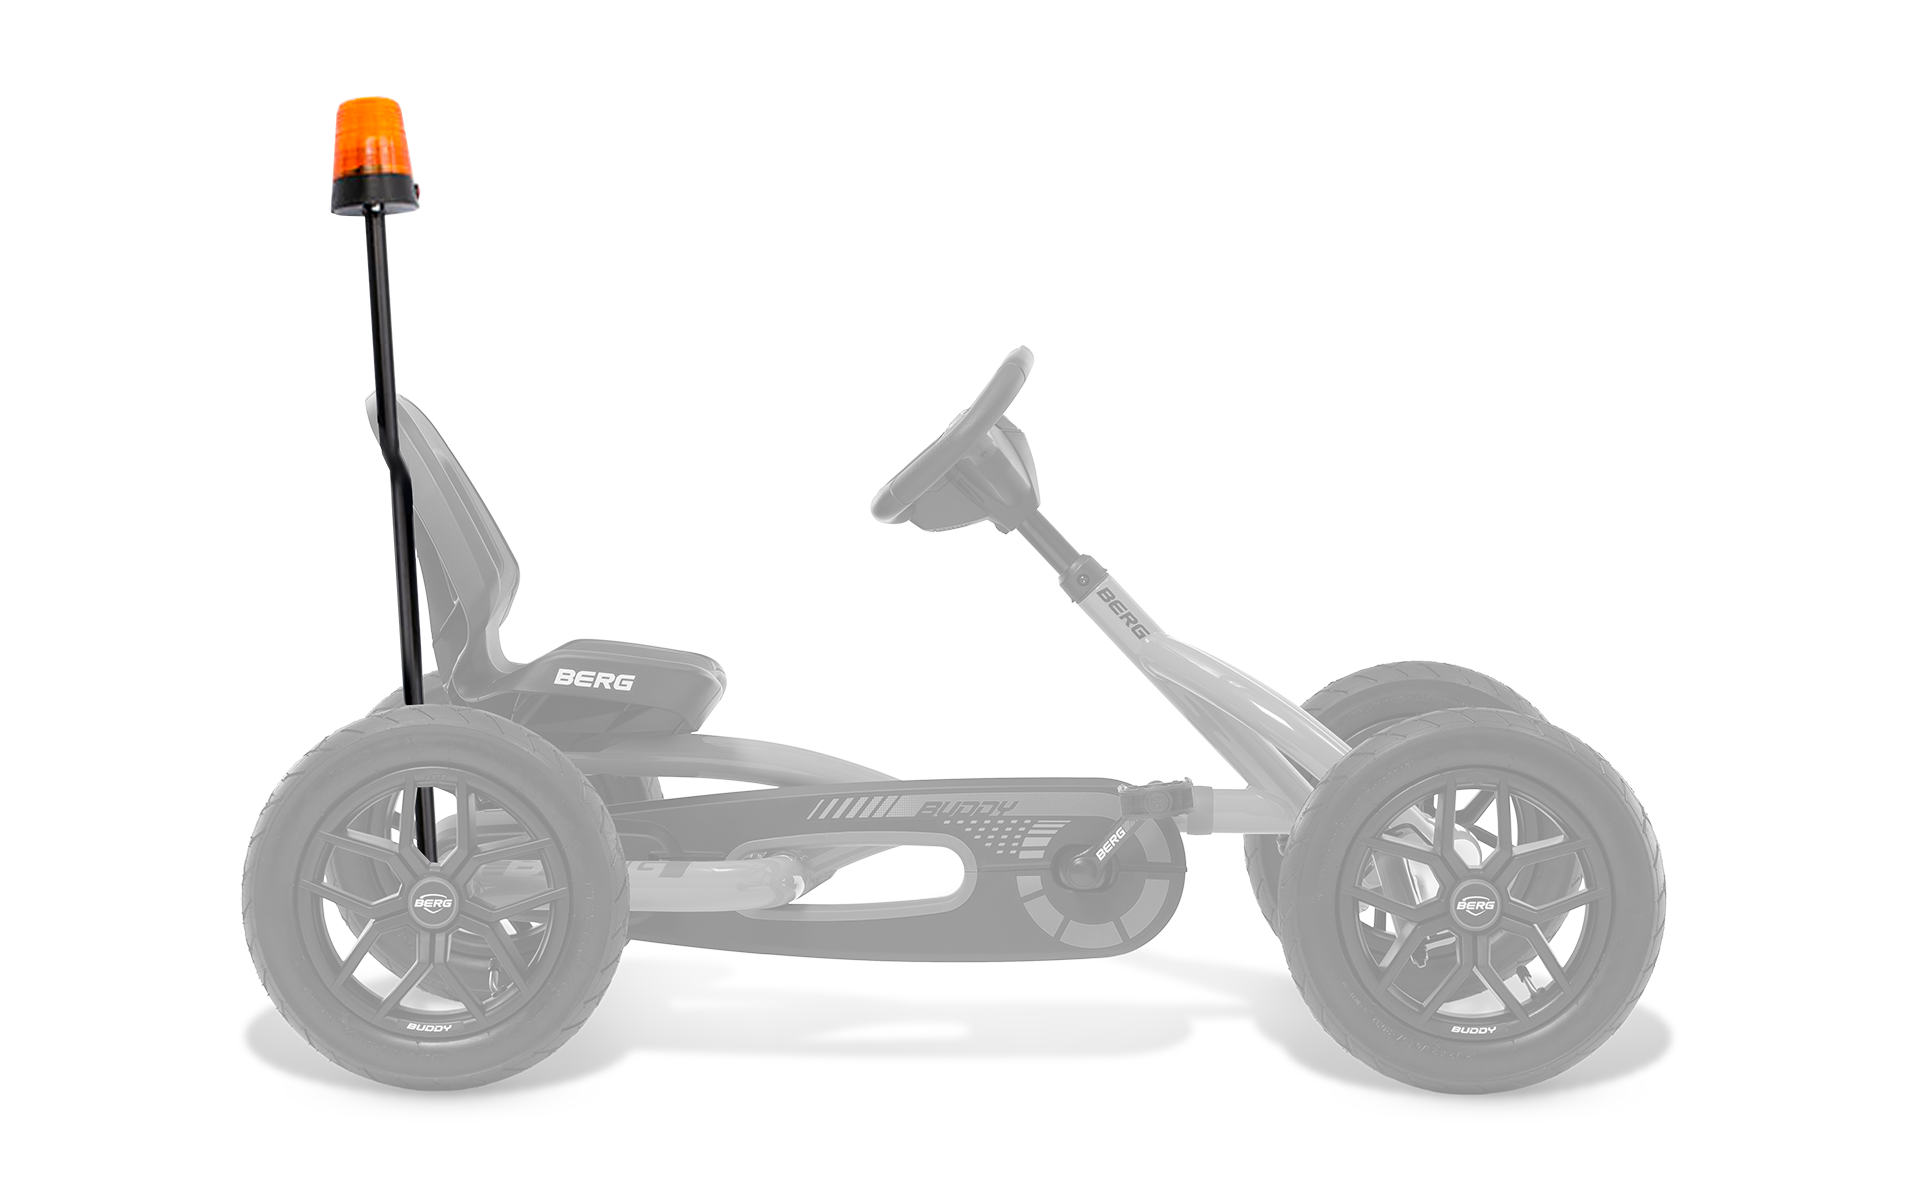 BERG Buddy Cross Go-Kart  Pedal Go-Kart with BERG Soundbox